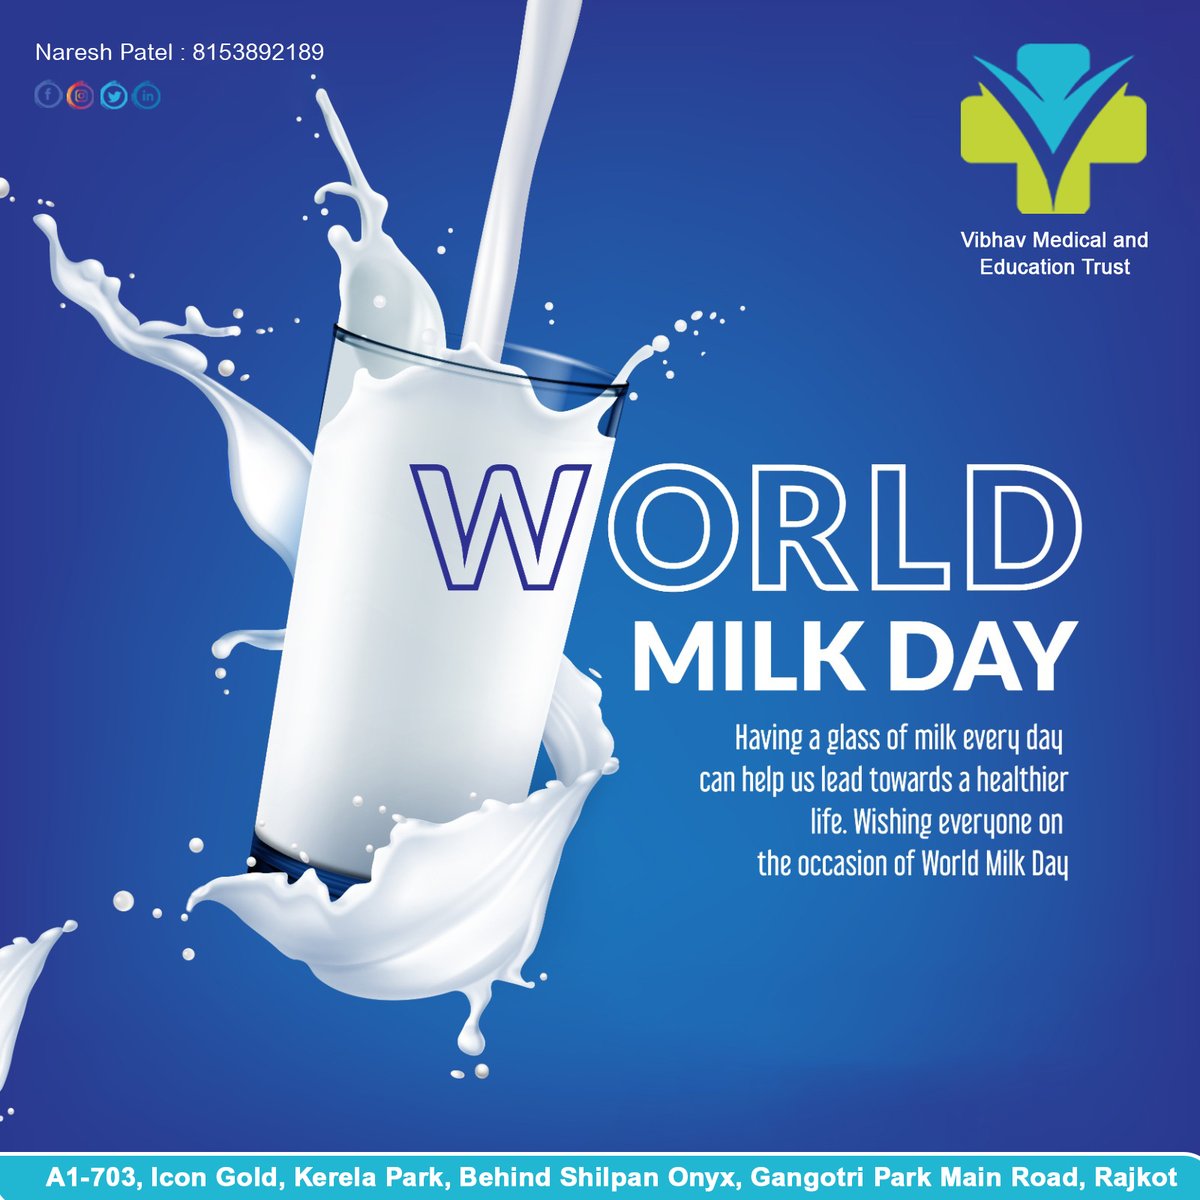 World Milk Day

#Milkday #WorldMilkDay #Milk #vibhavmedical #education #trust #NGO #blood #bank #charity #nonprofit #donate #socialwork #Donation #bloodbank #volianter #bloodtest #thalassemia #believe #peace #morbi #rajkot #gujarat #IndianaJones